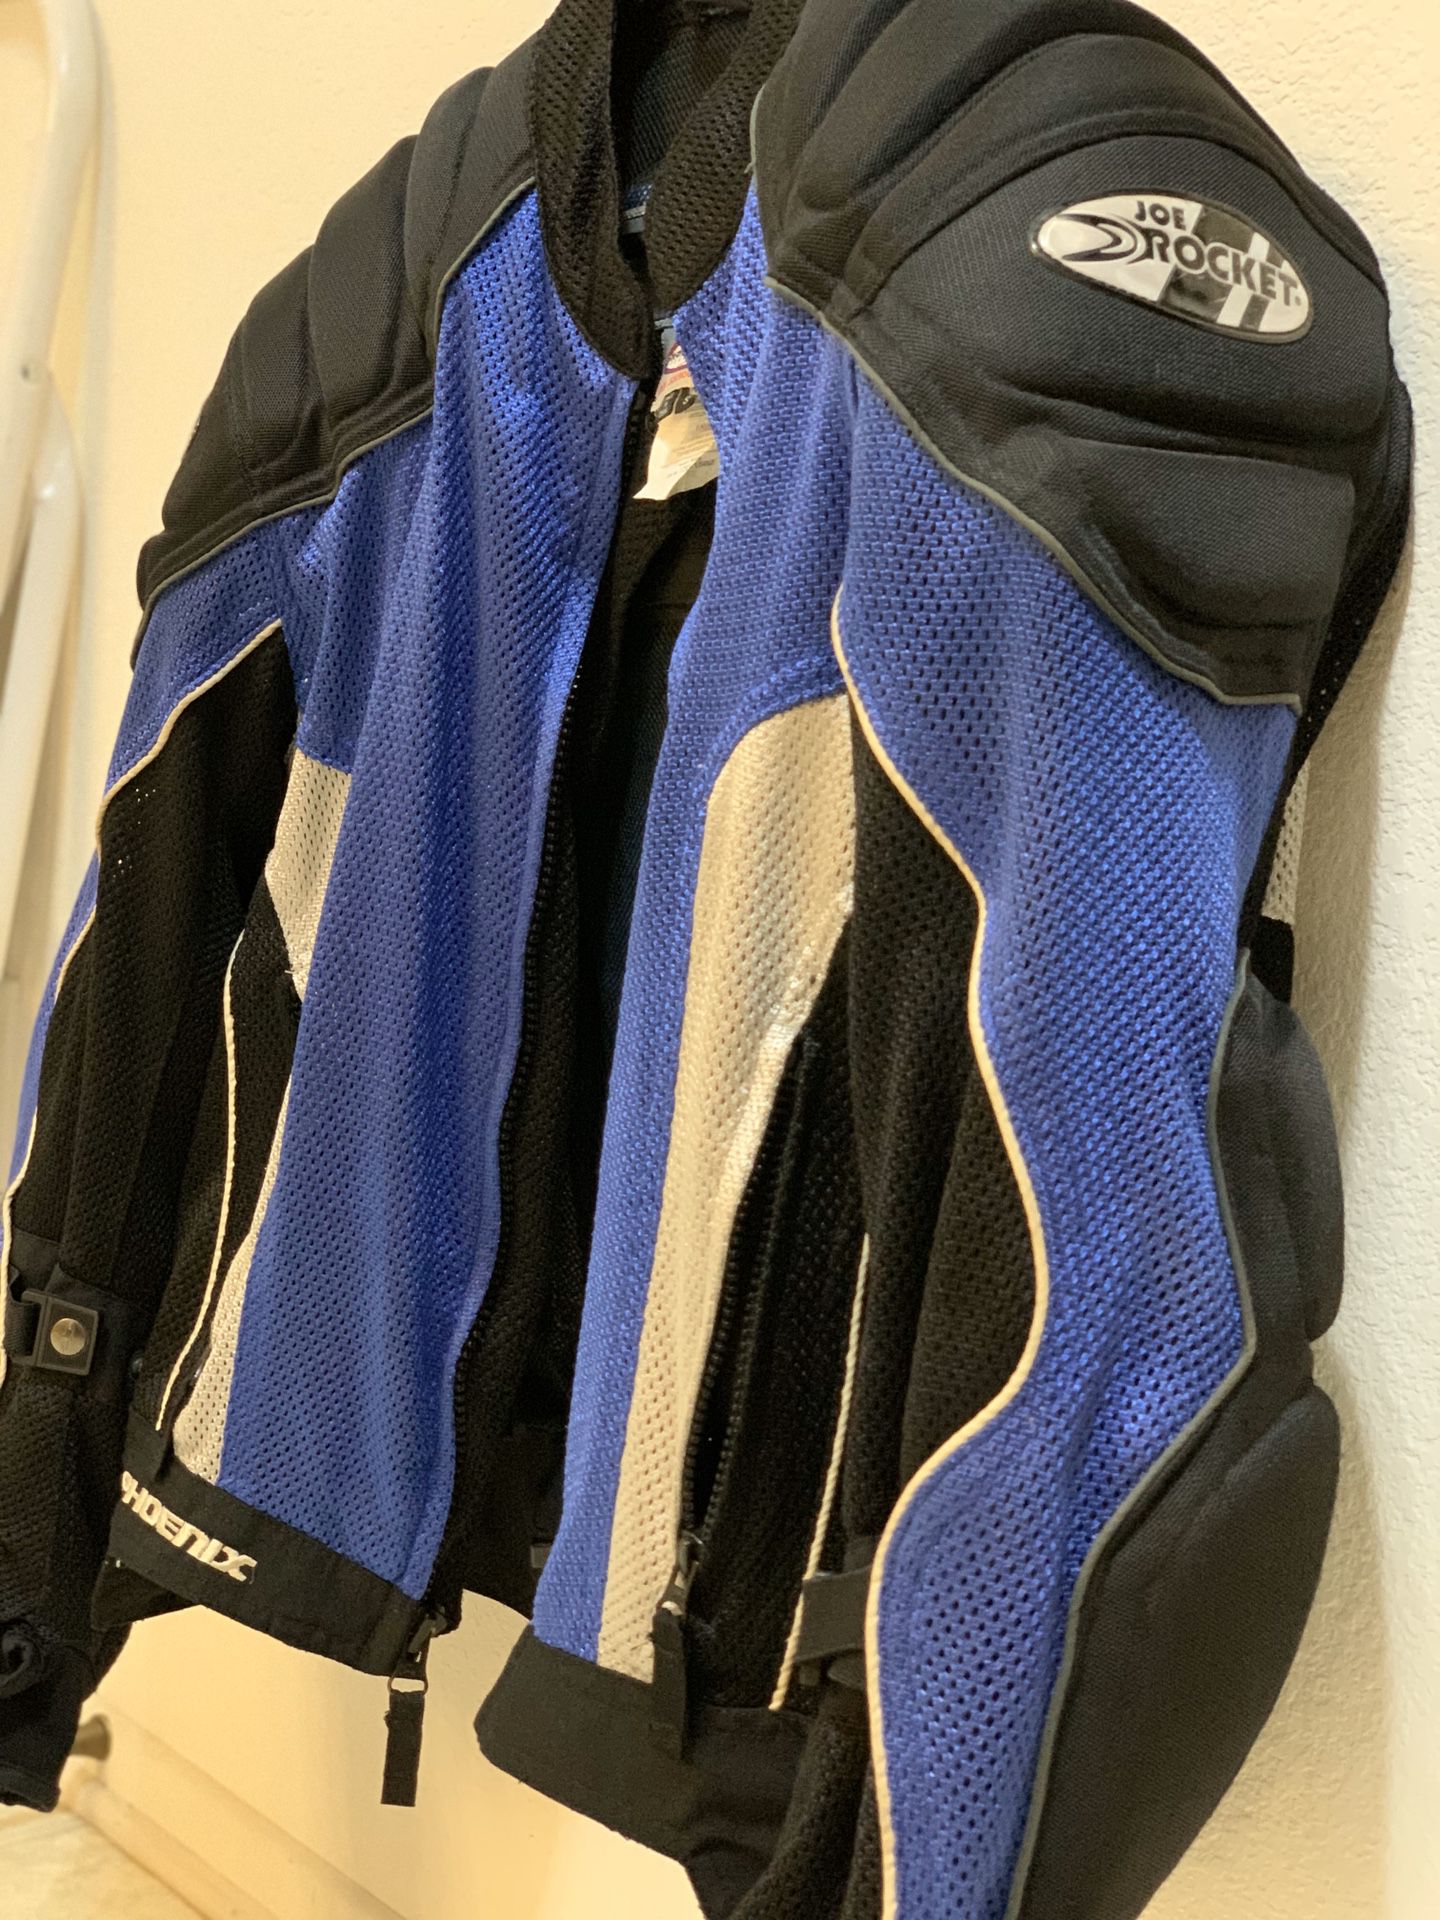 Blue Joe Rocket motorcycle jacket size small / S